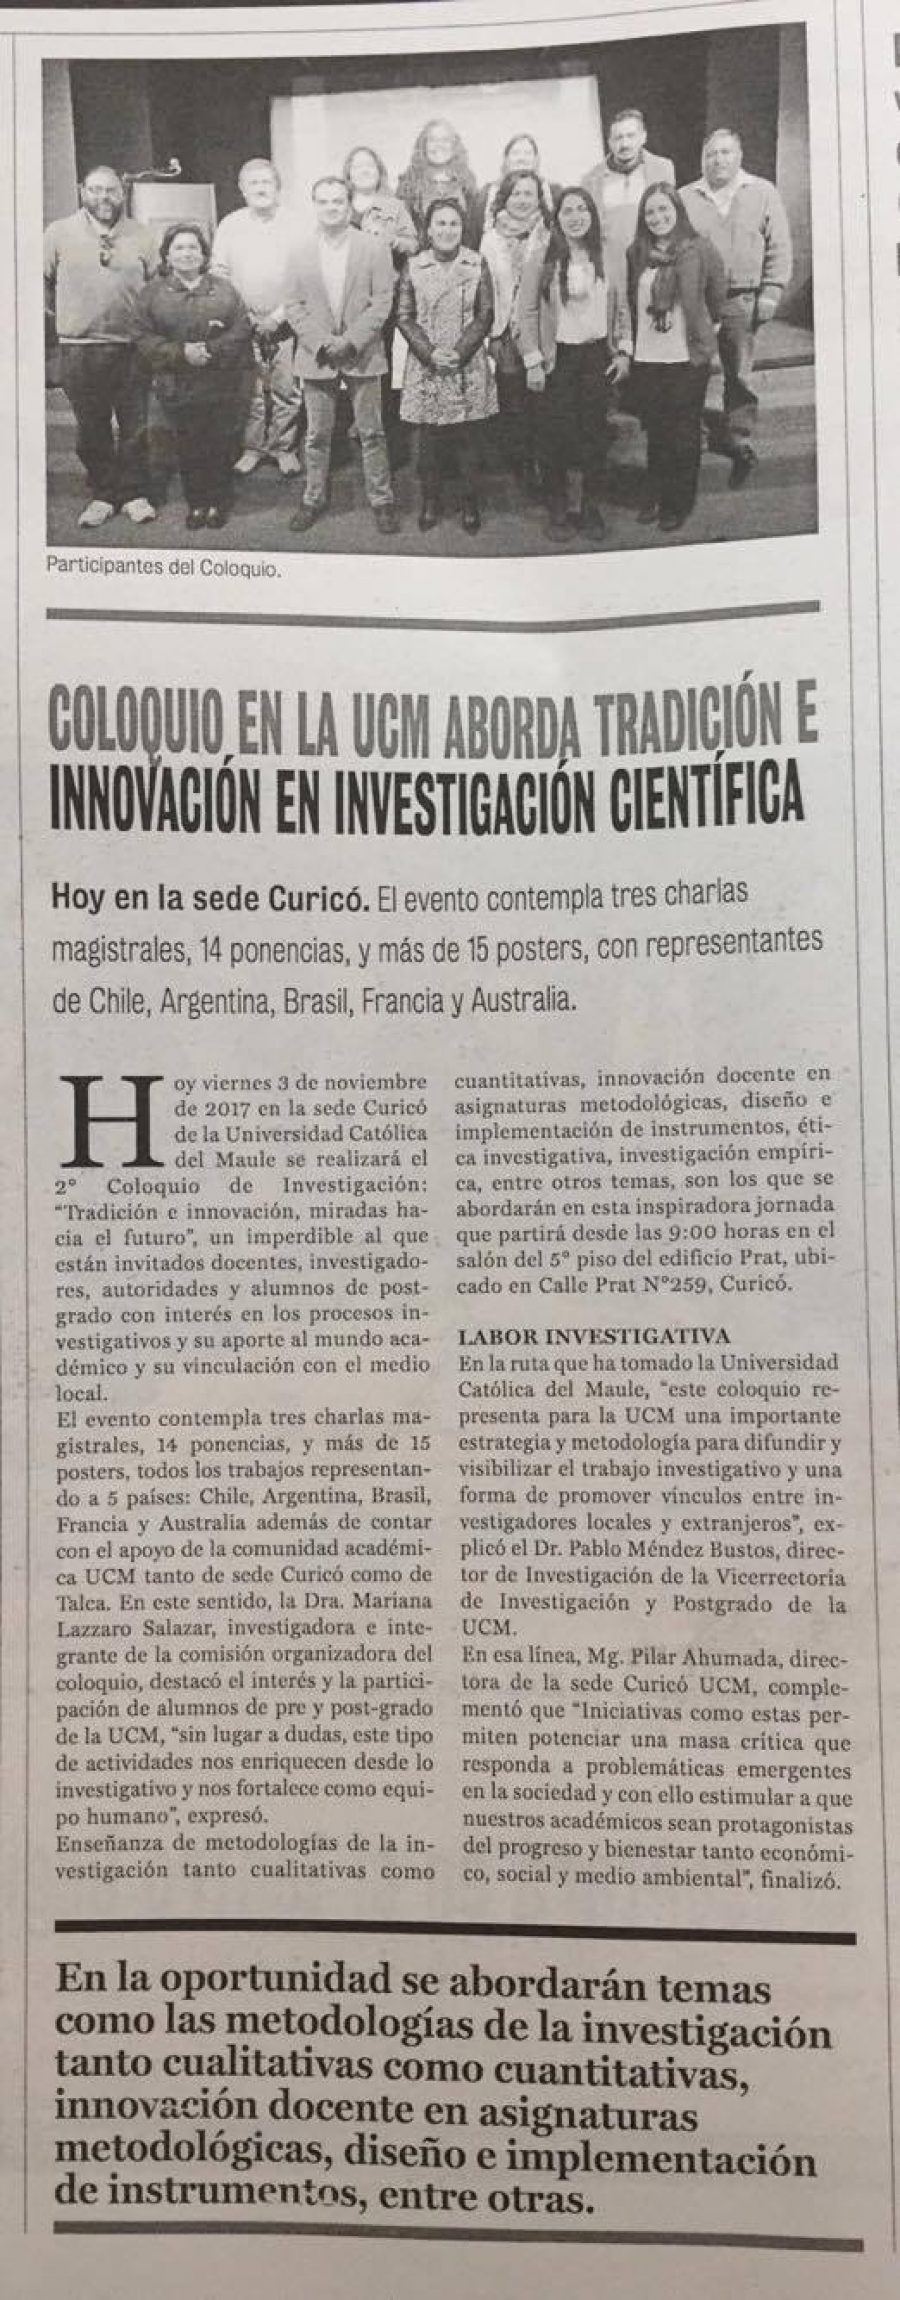 03 de noviembre en Diario La Prensa: “Coloquio en la UCM aborda tradición e innovación en investigación científica”